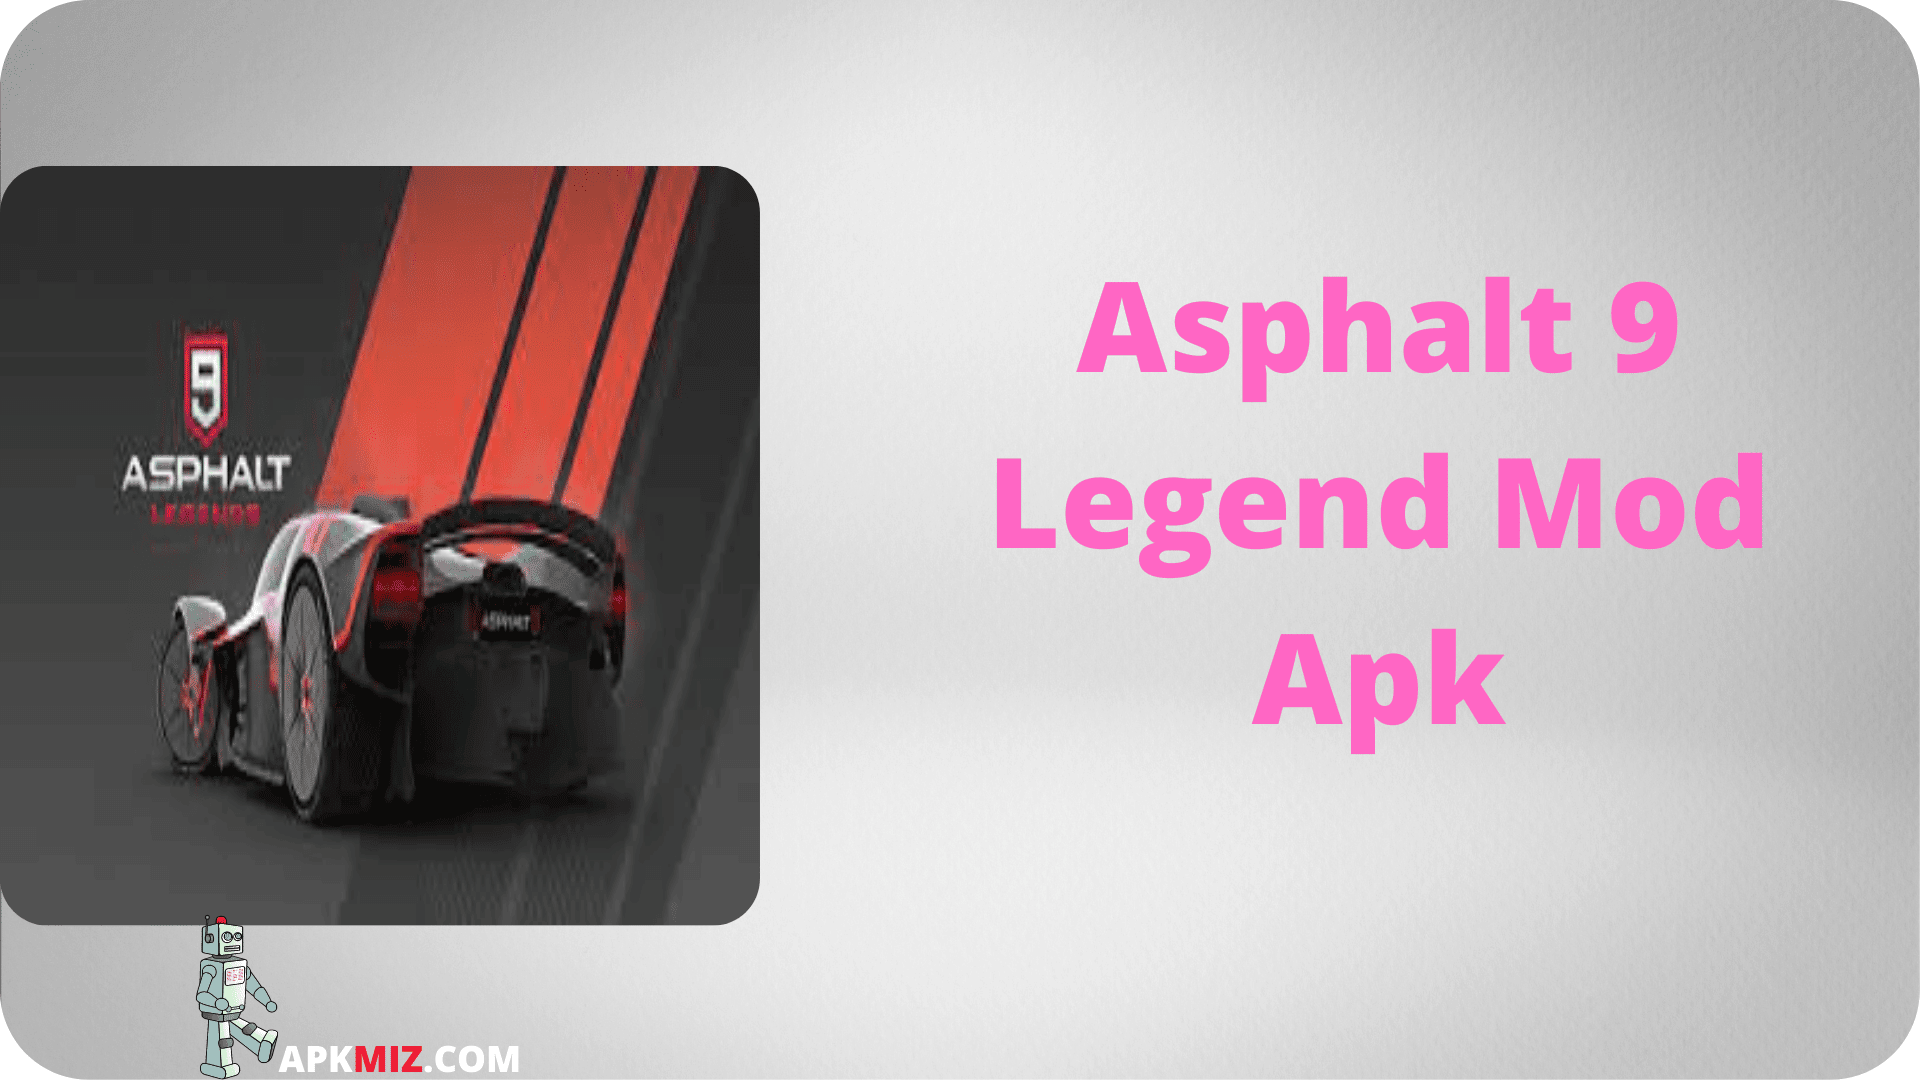 Asphalt 9 Legend Mod Apk